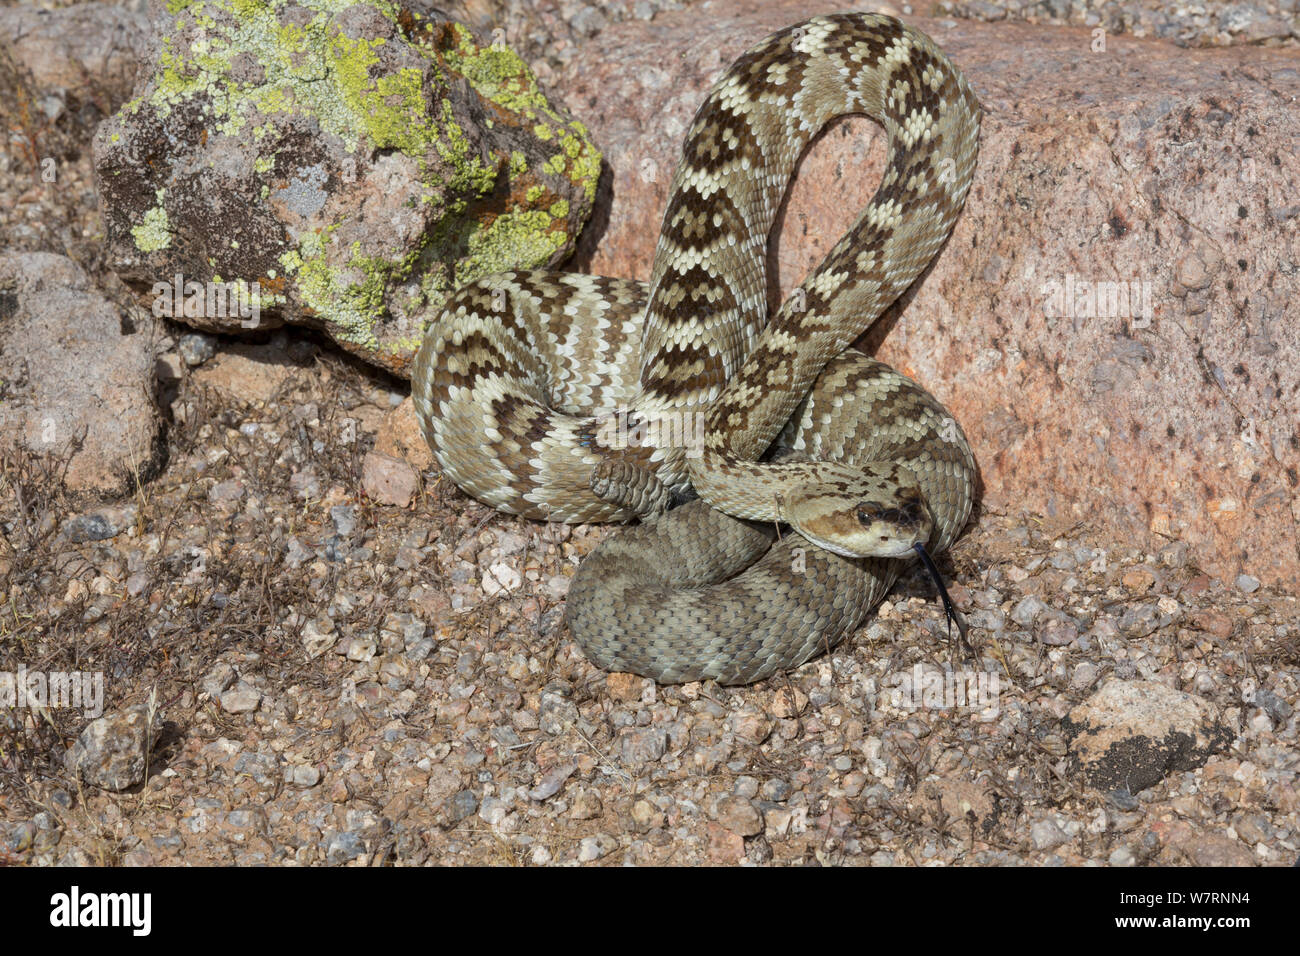 Northern Black-Tailed Rattlesnake (Crotalus molossus molossus) Sonoran Desert, Mesa, Arizona, USA Stock Photo